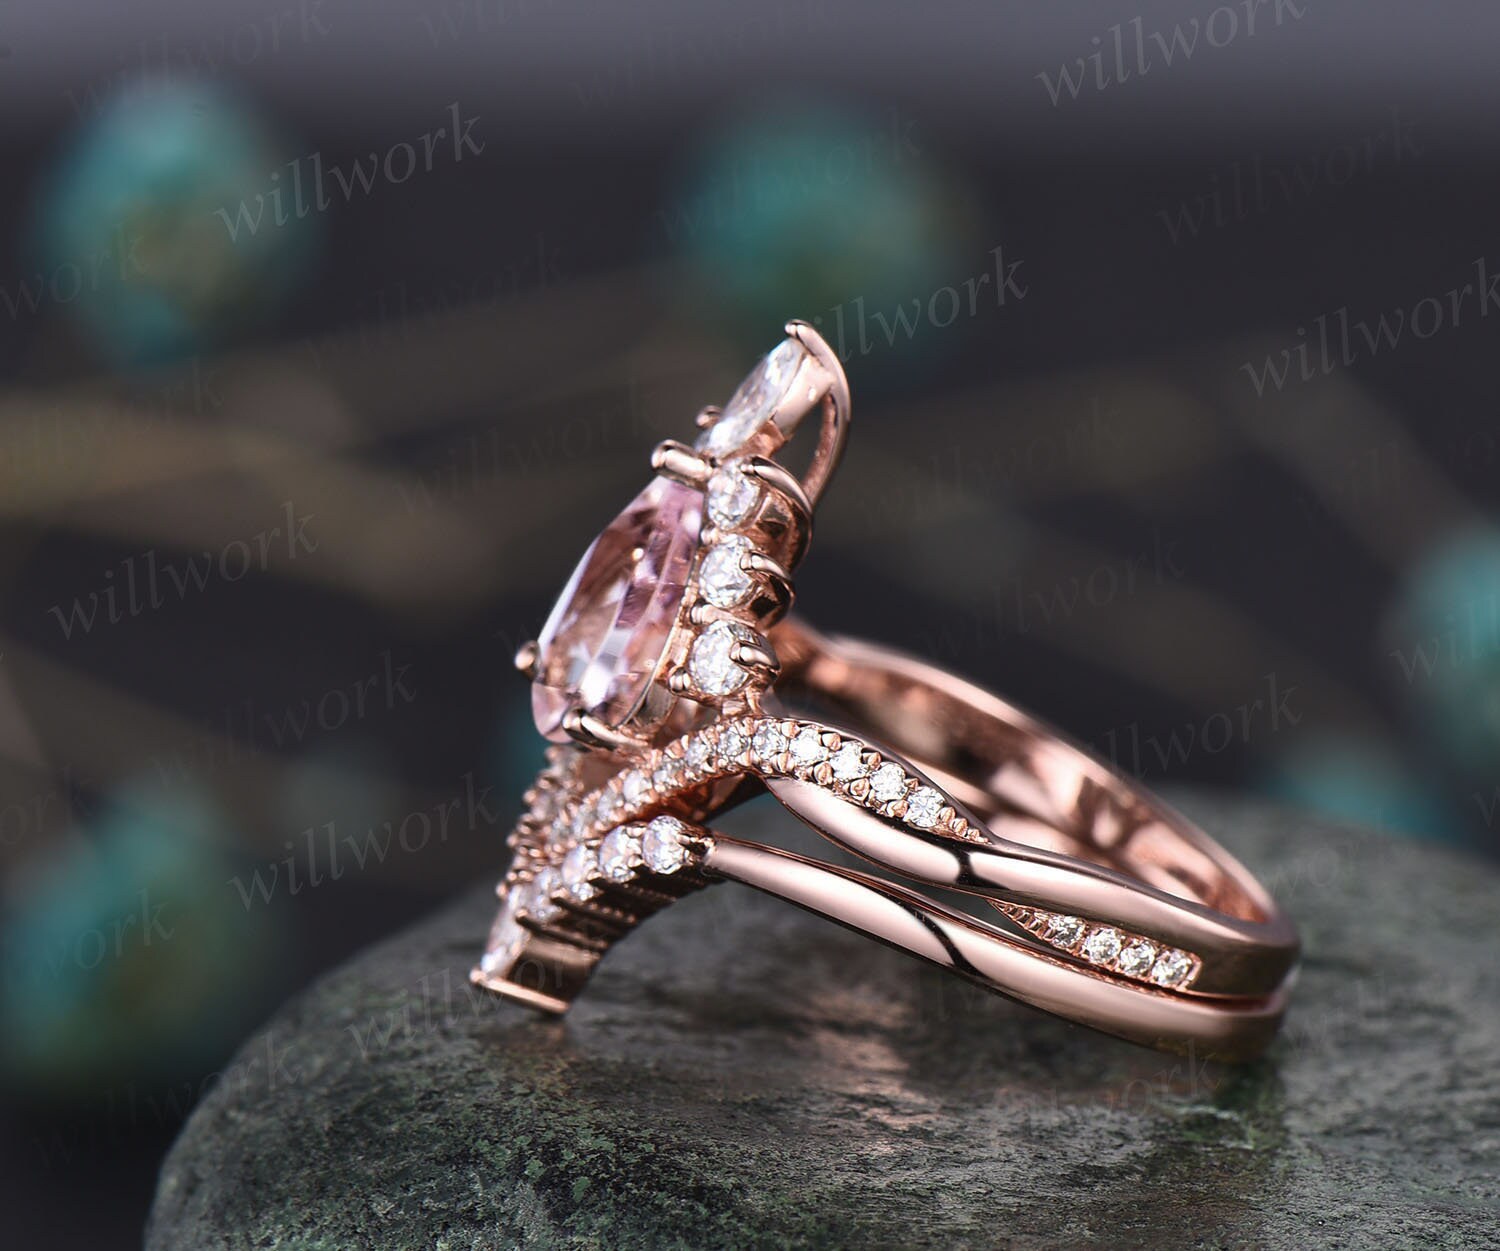 Milgrain 8x5mm Pear Shape 1.75 Carat Pink Morganite Engagement Ring 10k Rose  Gold Morganite Ring Wedding Ring Art deco Antique style - Walmart.com